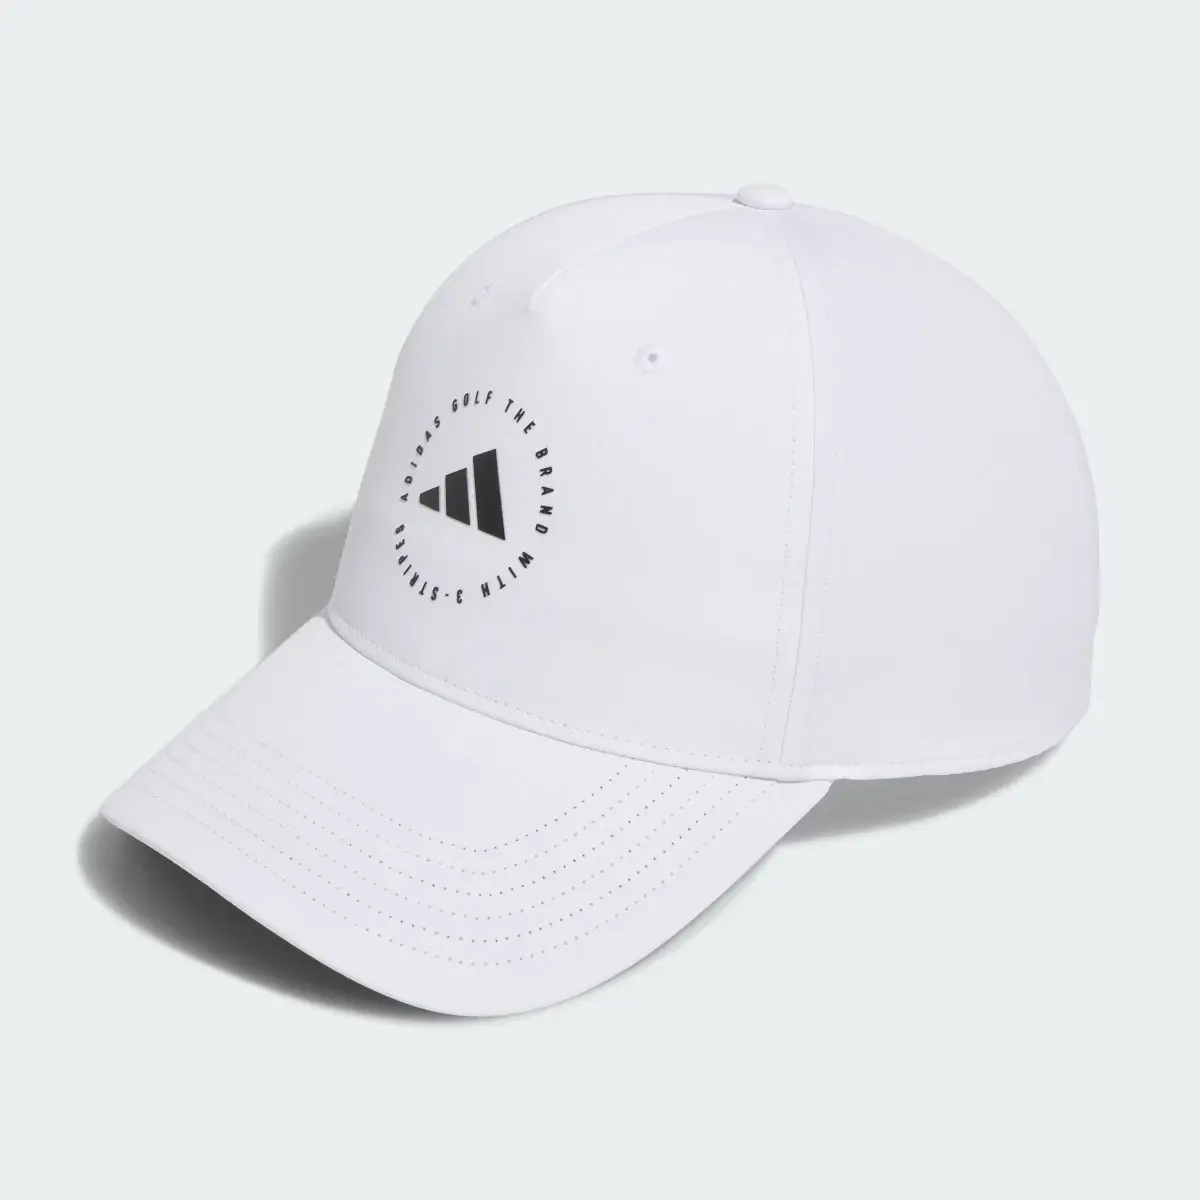 Adidas Golf Performance Hat. 2